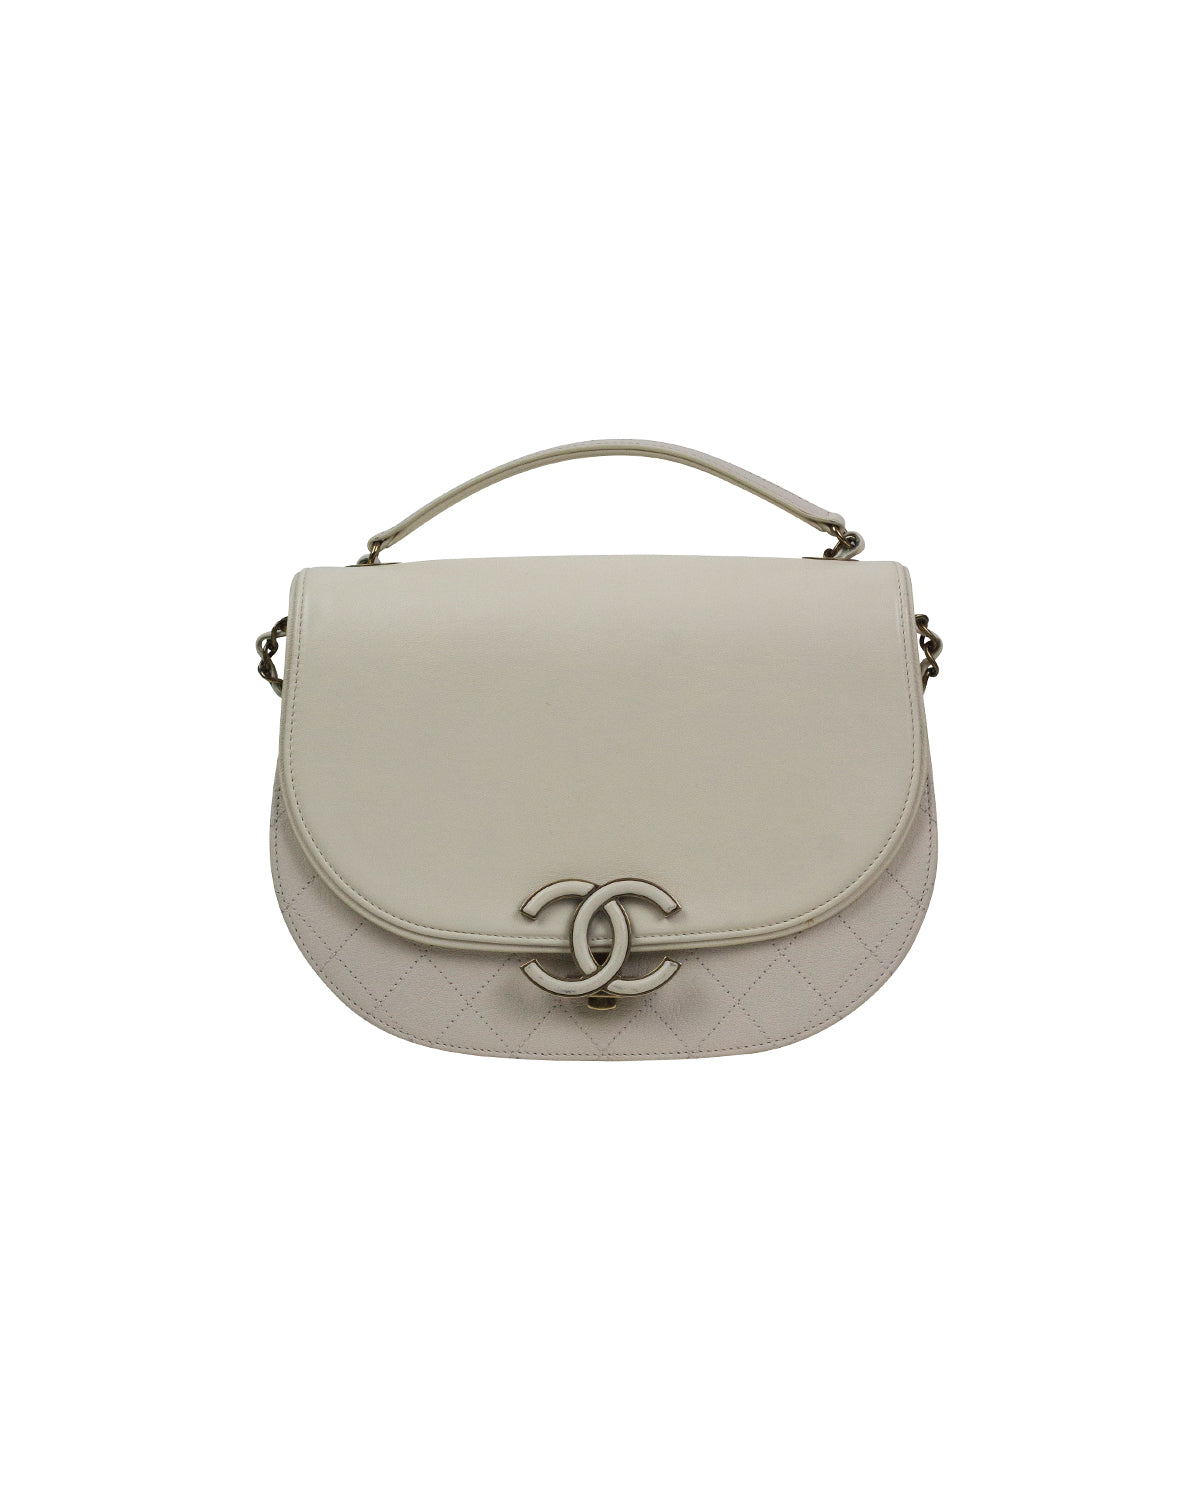 Chanel Coco Curve Ivory Flap Bag | Size Medium – eightonethree.